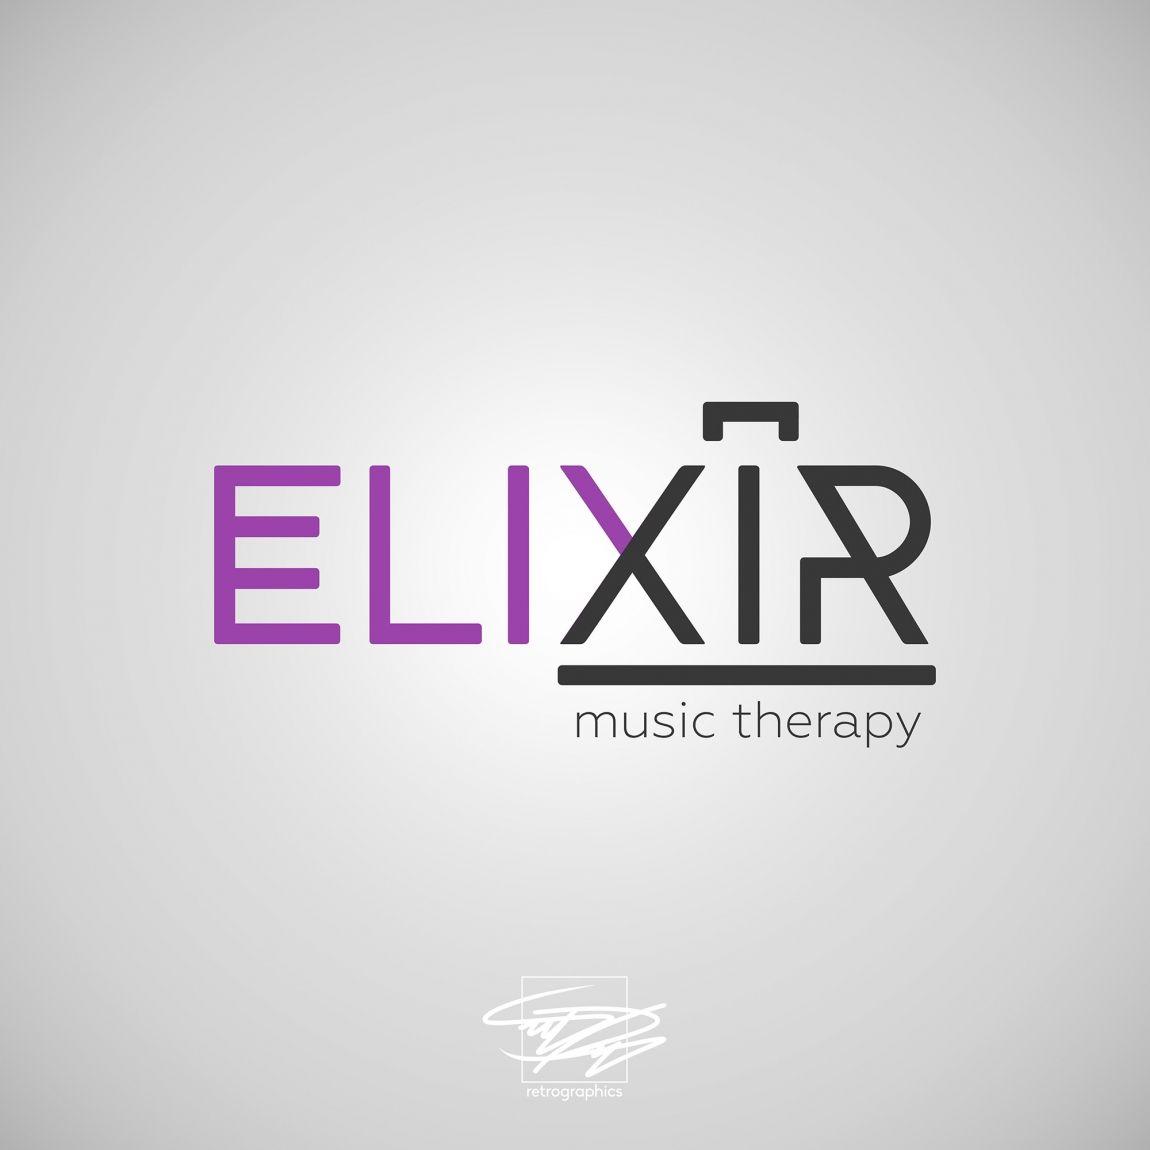 Elixir Logo - ELIXIR logo | The Art of Dmitry Blagorodov. Concept Art ...